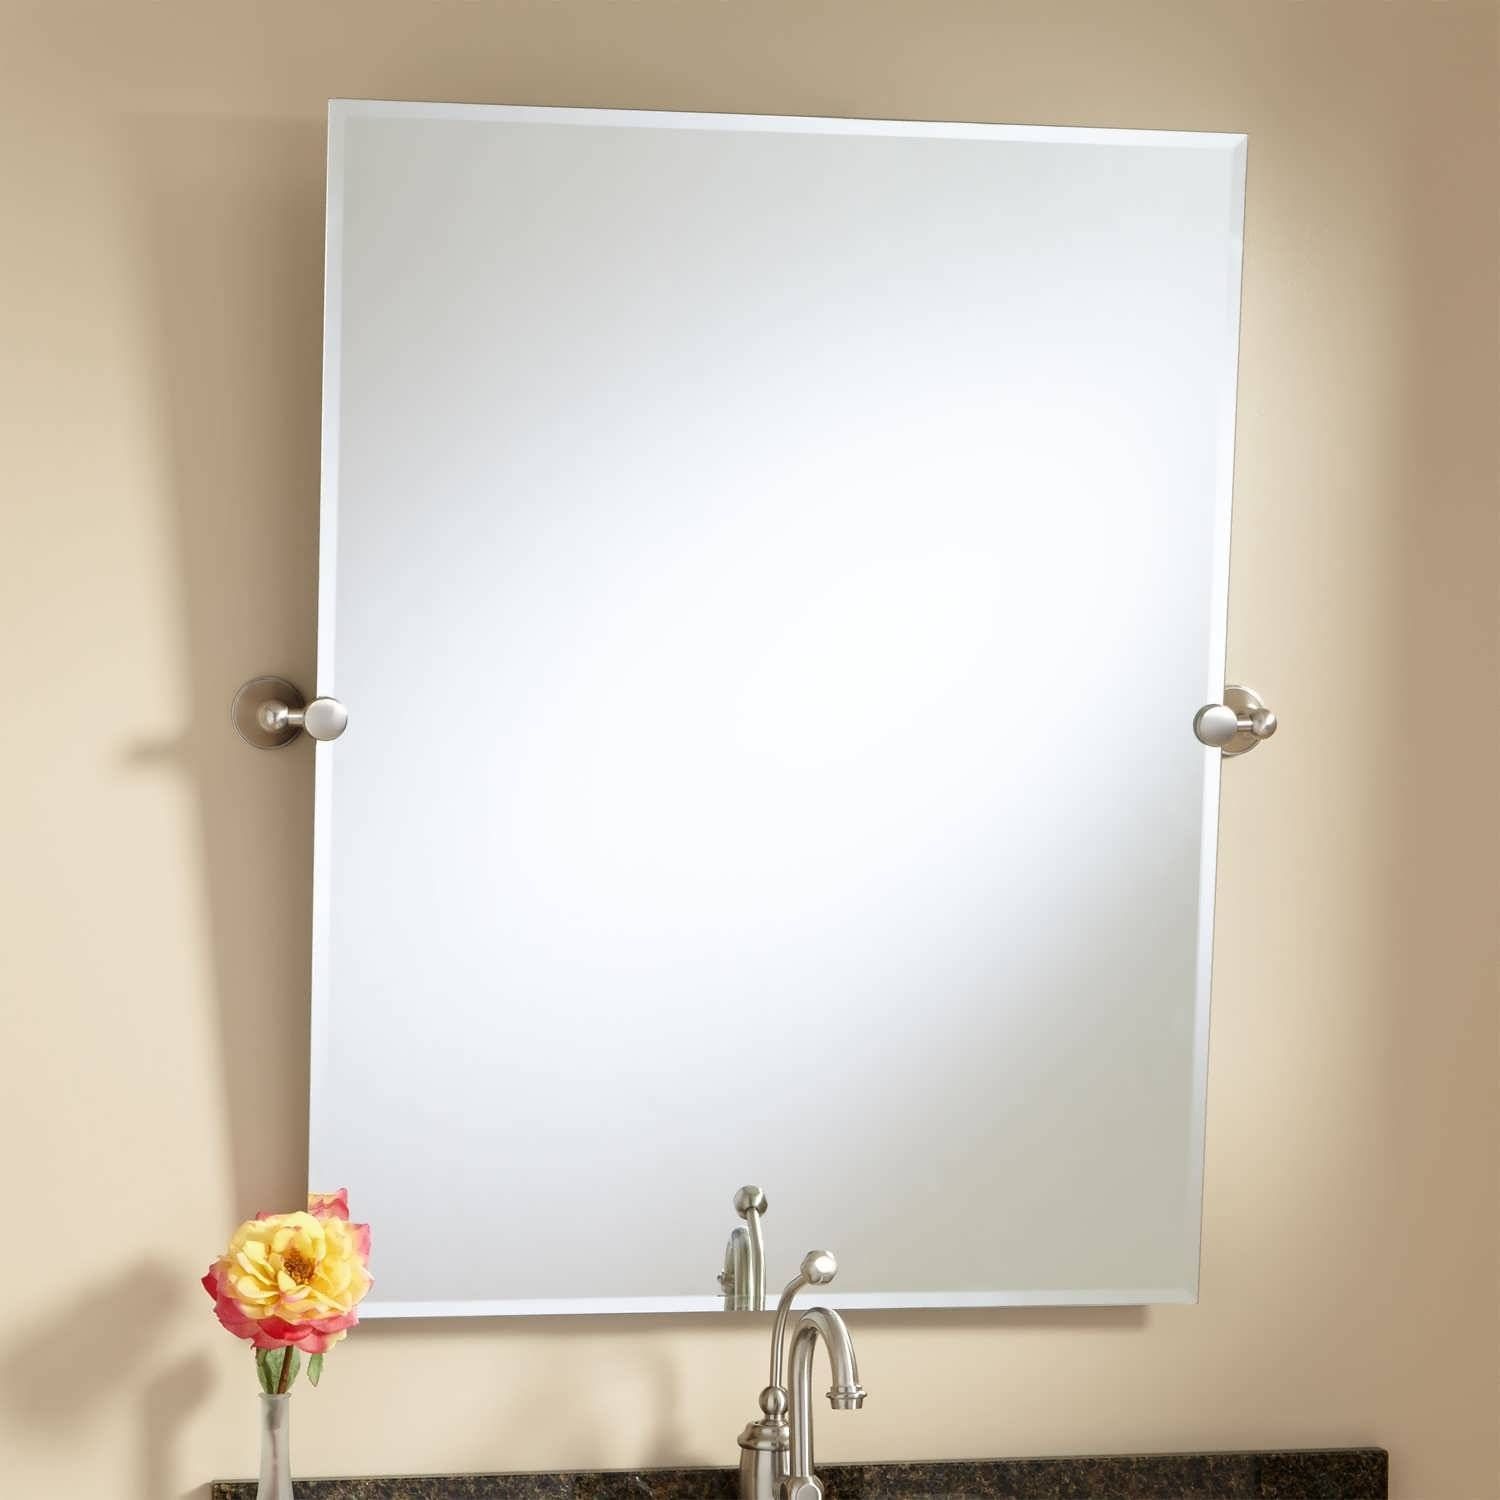 Bathroom : Brushed Nickel Bathroom Mirror Bathroom Mirror Inside Contemporary Round Mirrors (View 22 of 25)